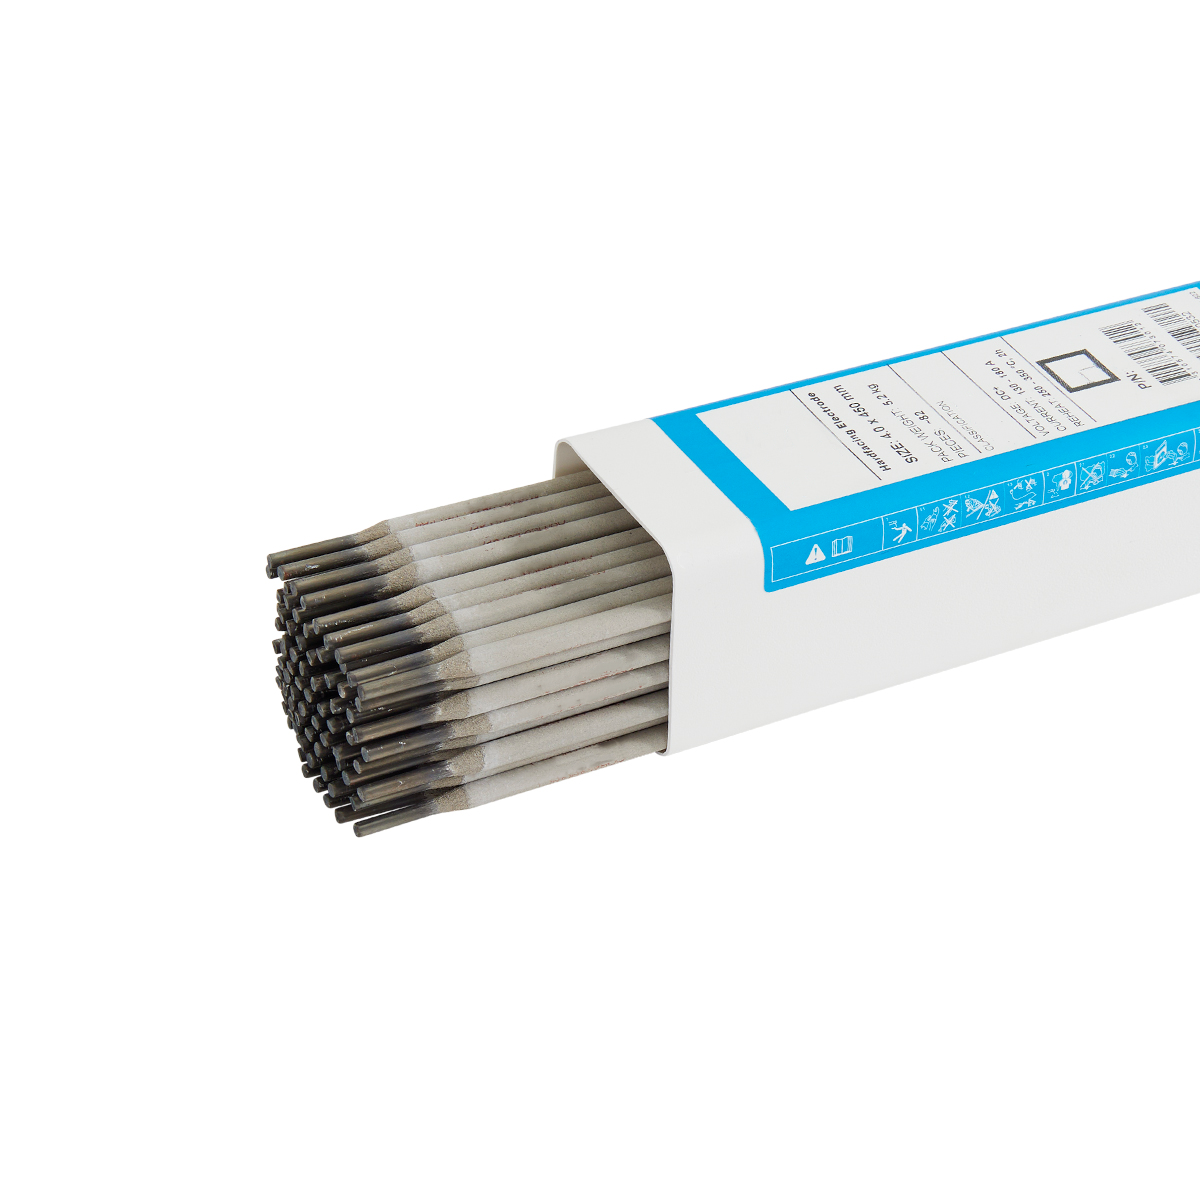 Cigweld Satincrome 308L-17 Welding Electrodes